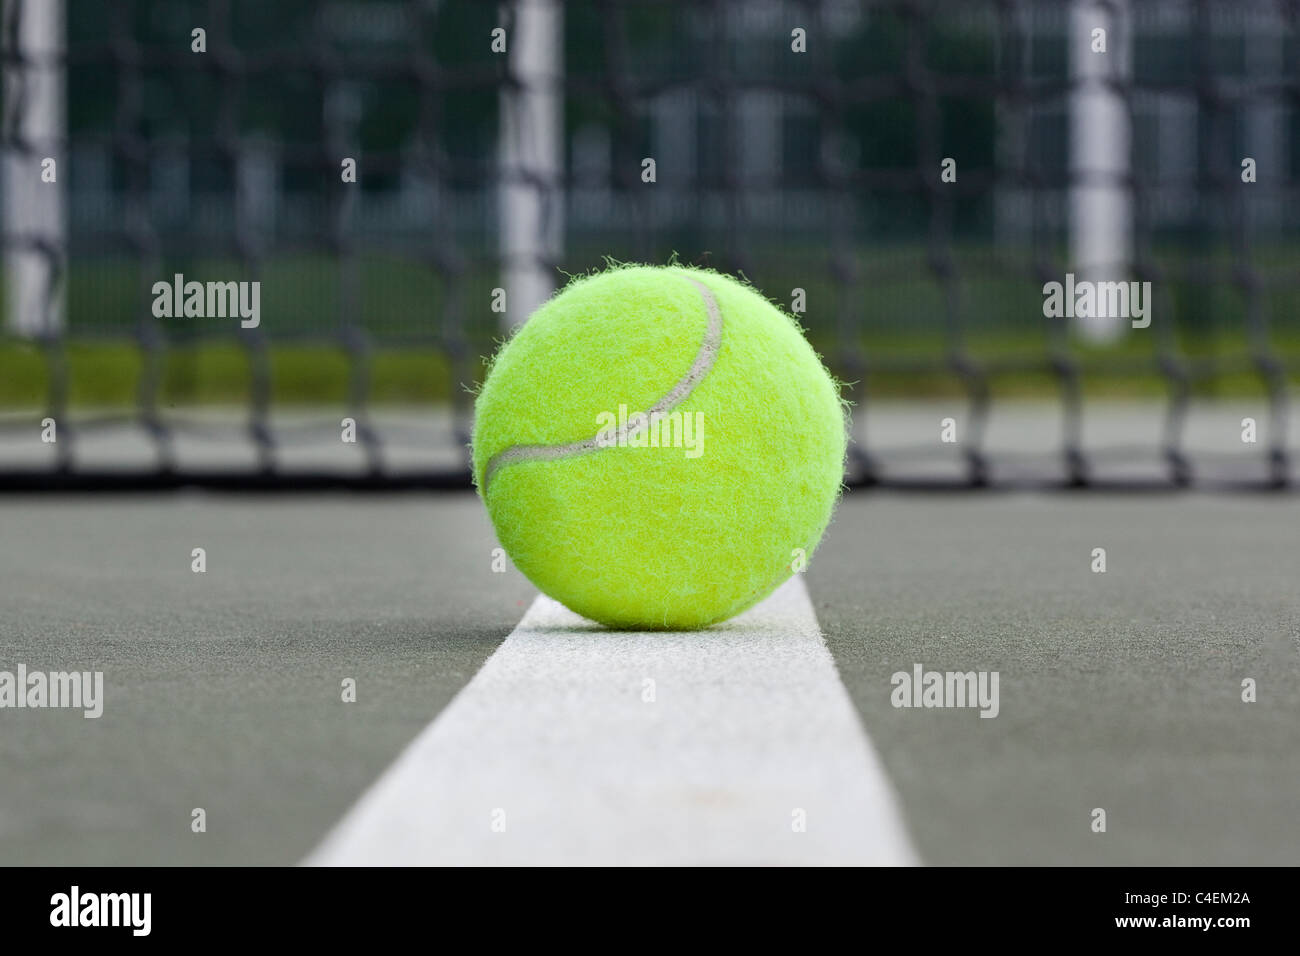 A yellow tennis ball on a tennis court Stock Photo